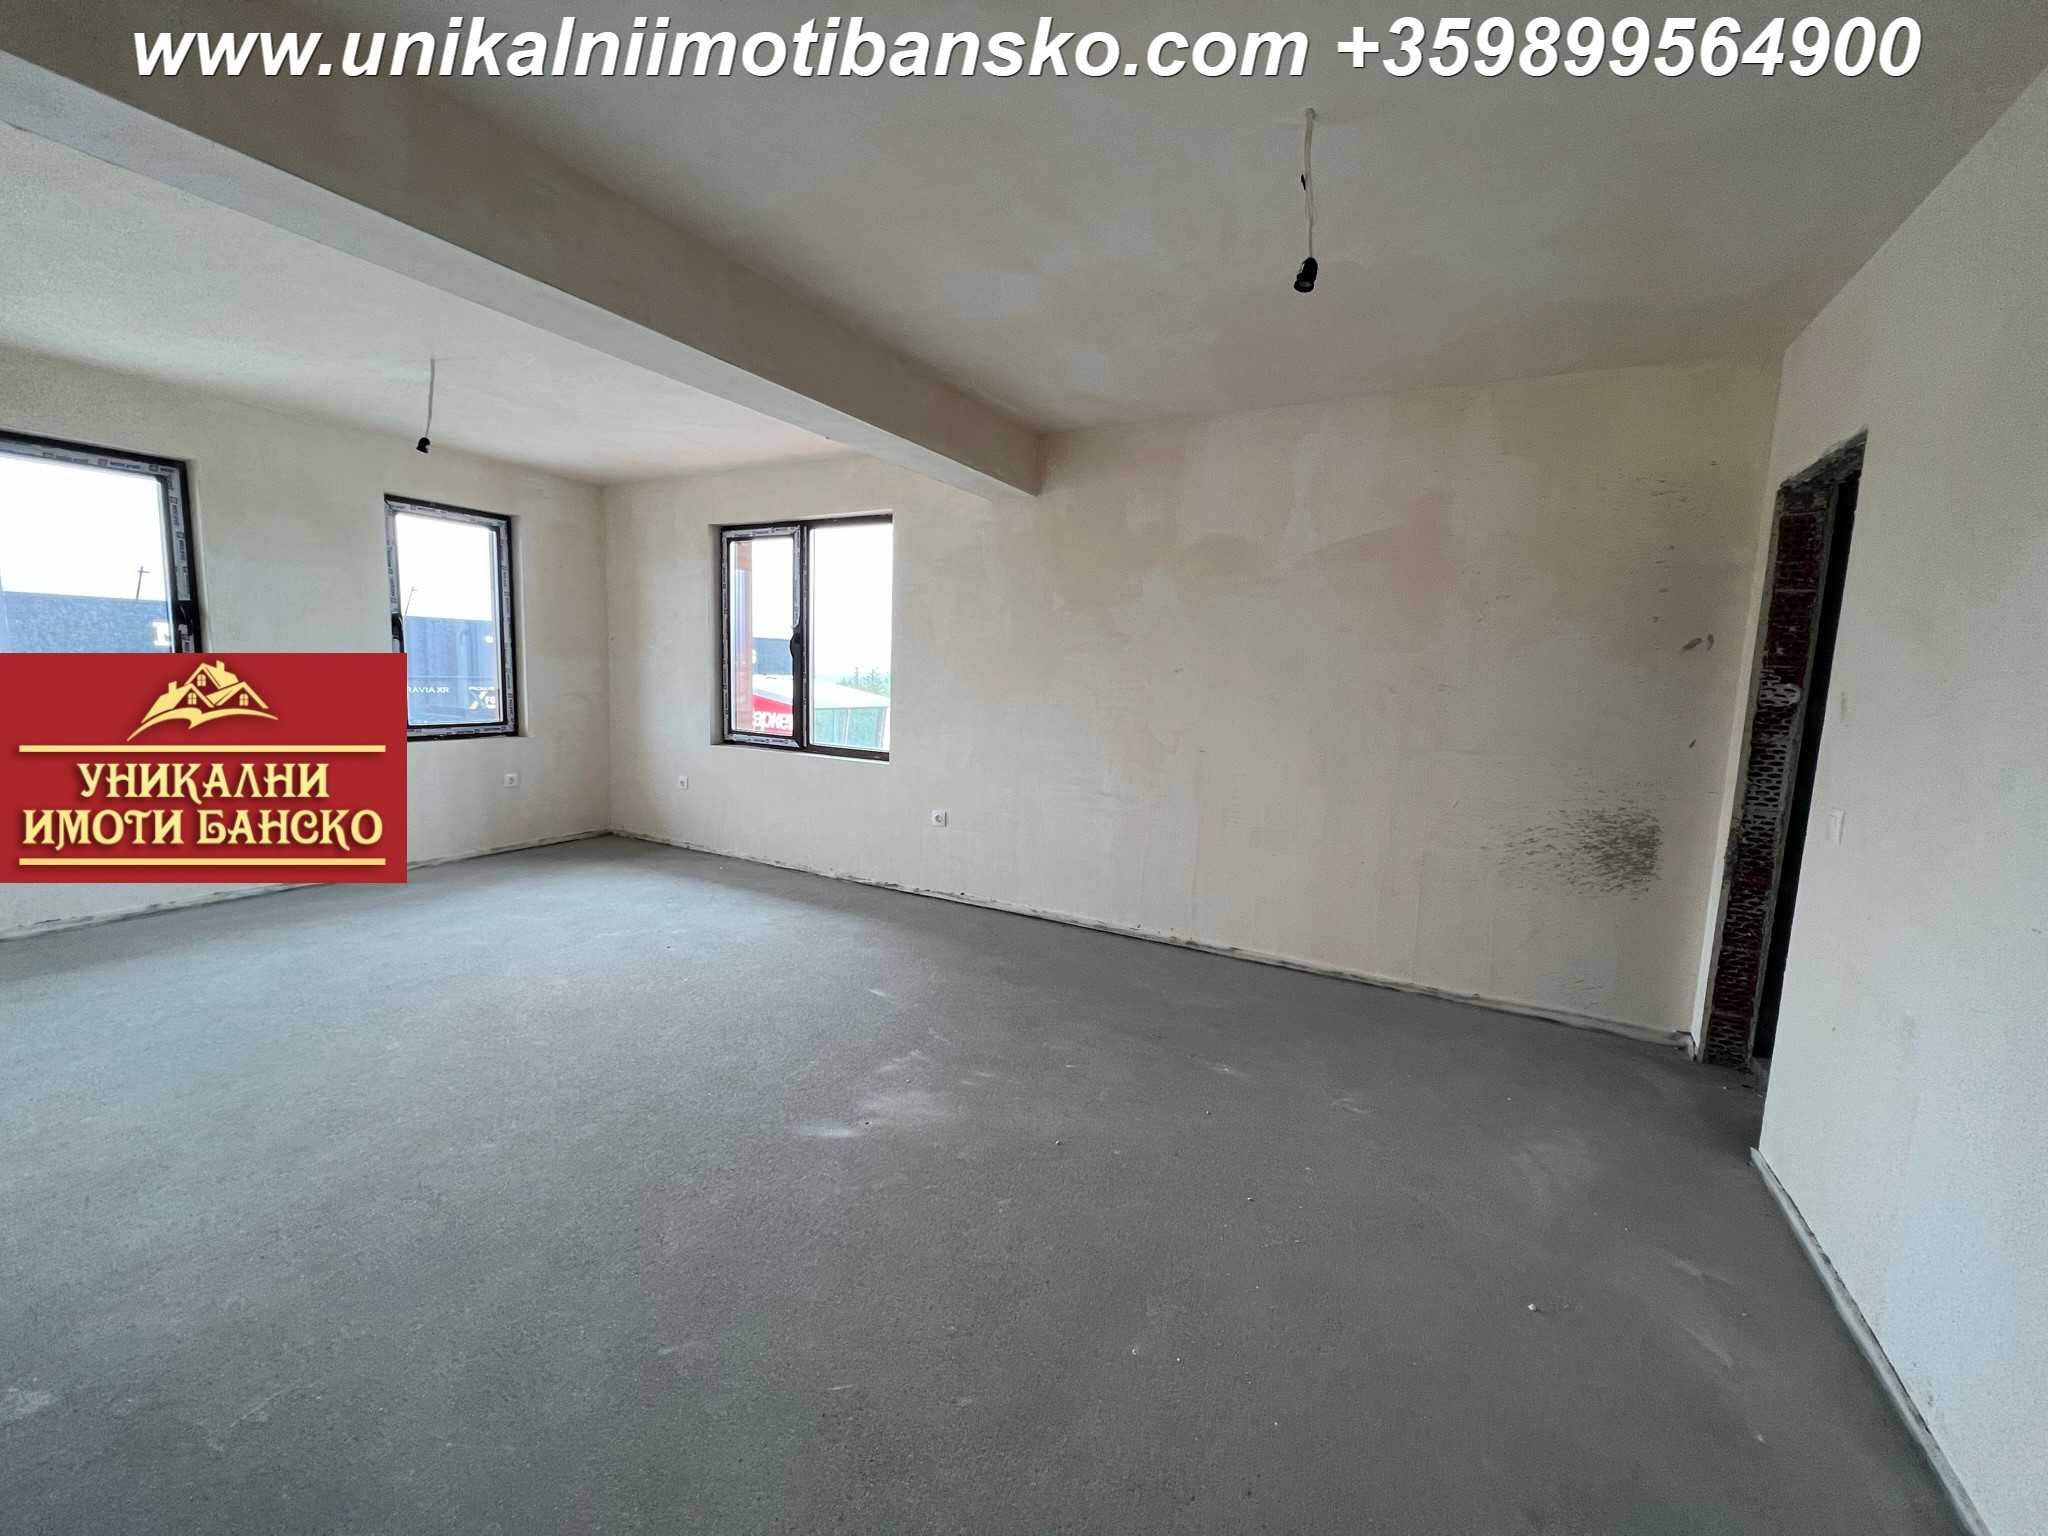 Просторен тристаен апартамент за продажба в град Банско